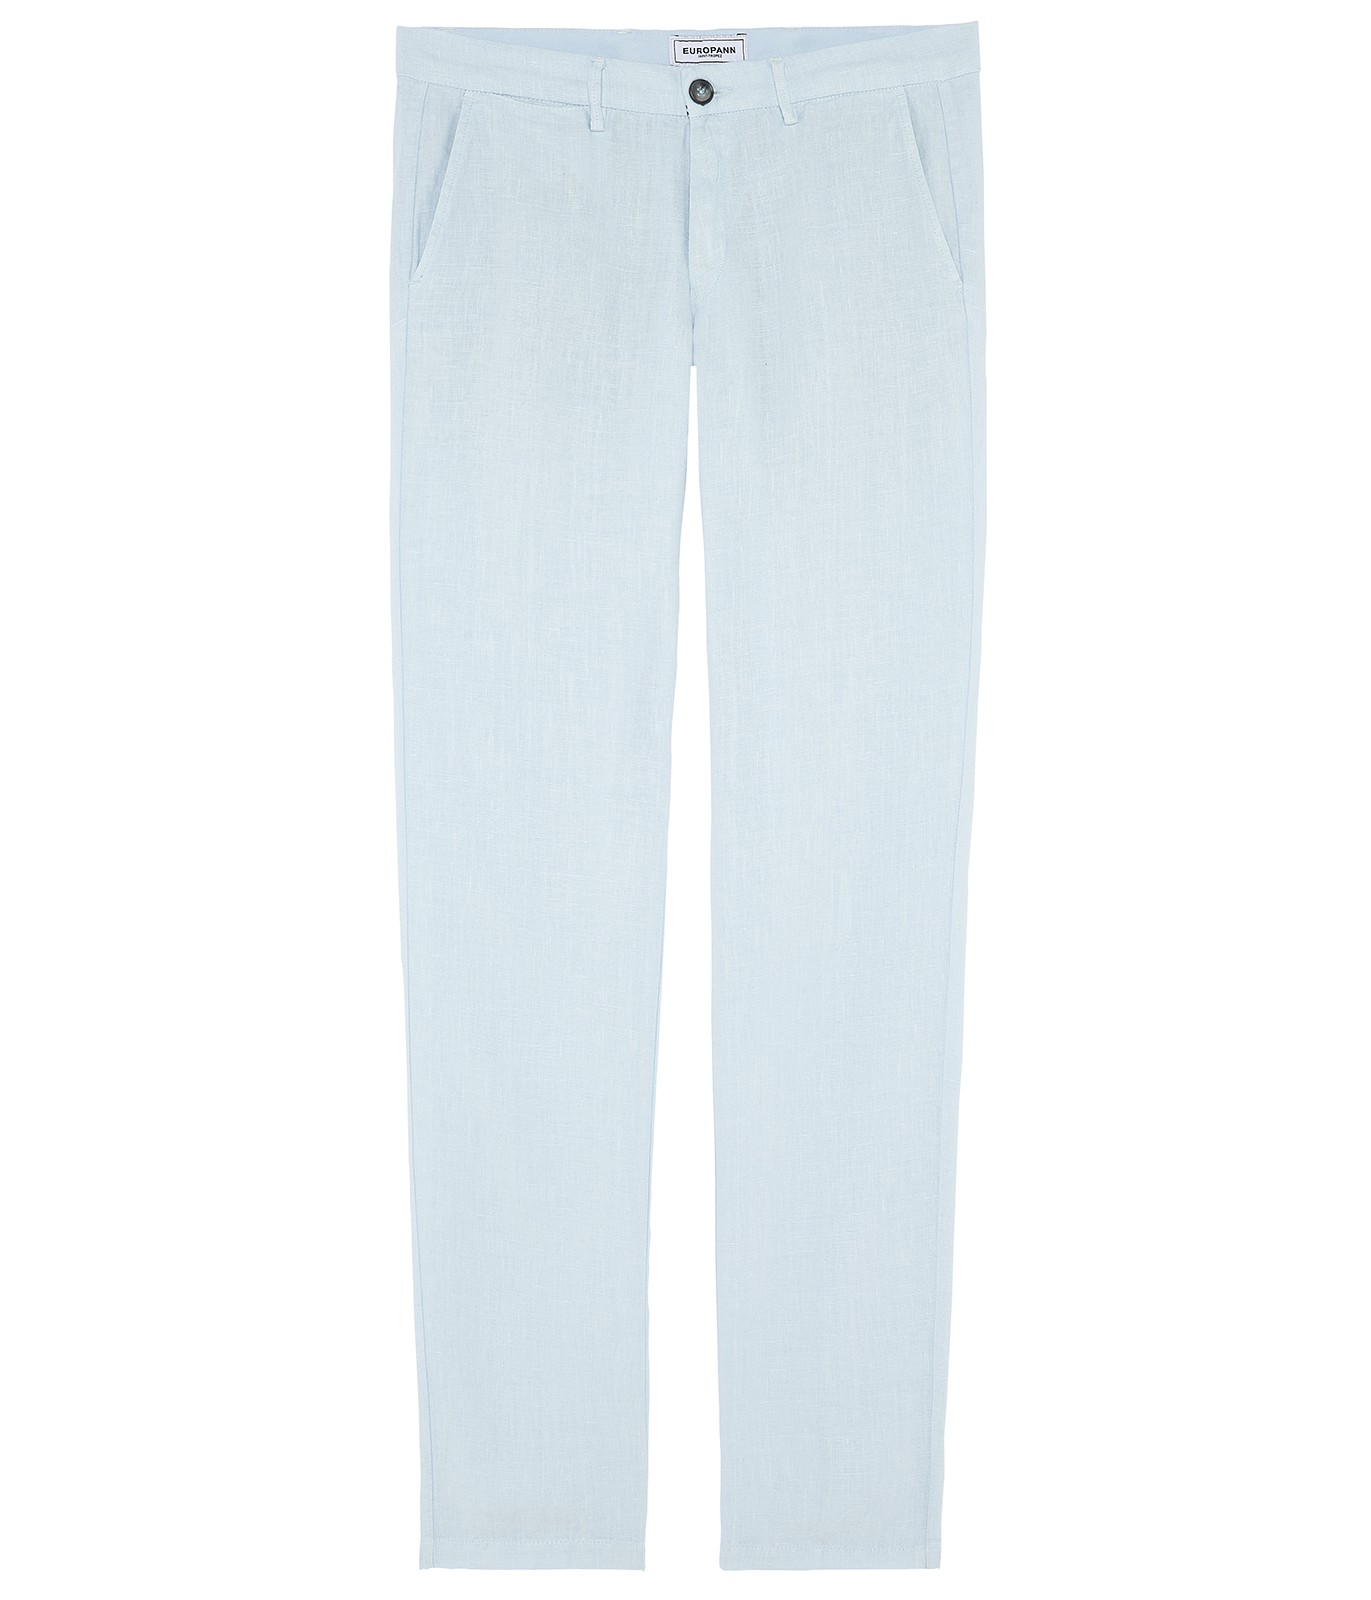 Summer Fashion Men's Pants Elastic Waist Ankle Length Casual Suit Pant  Korean Style Regular Fit Solid